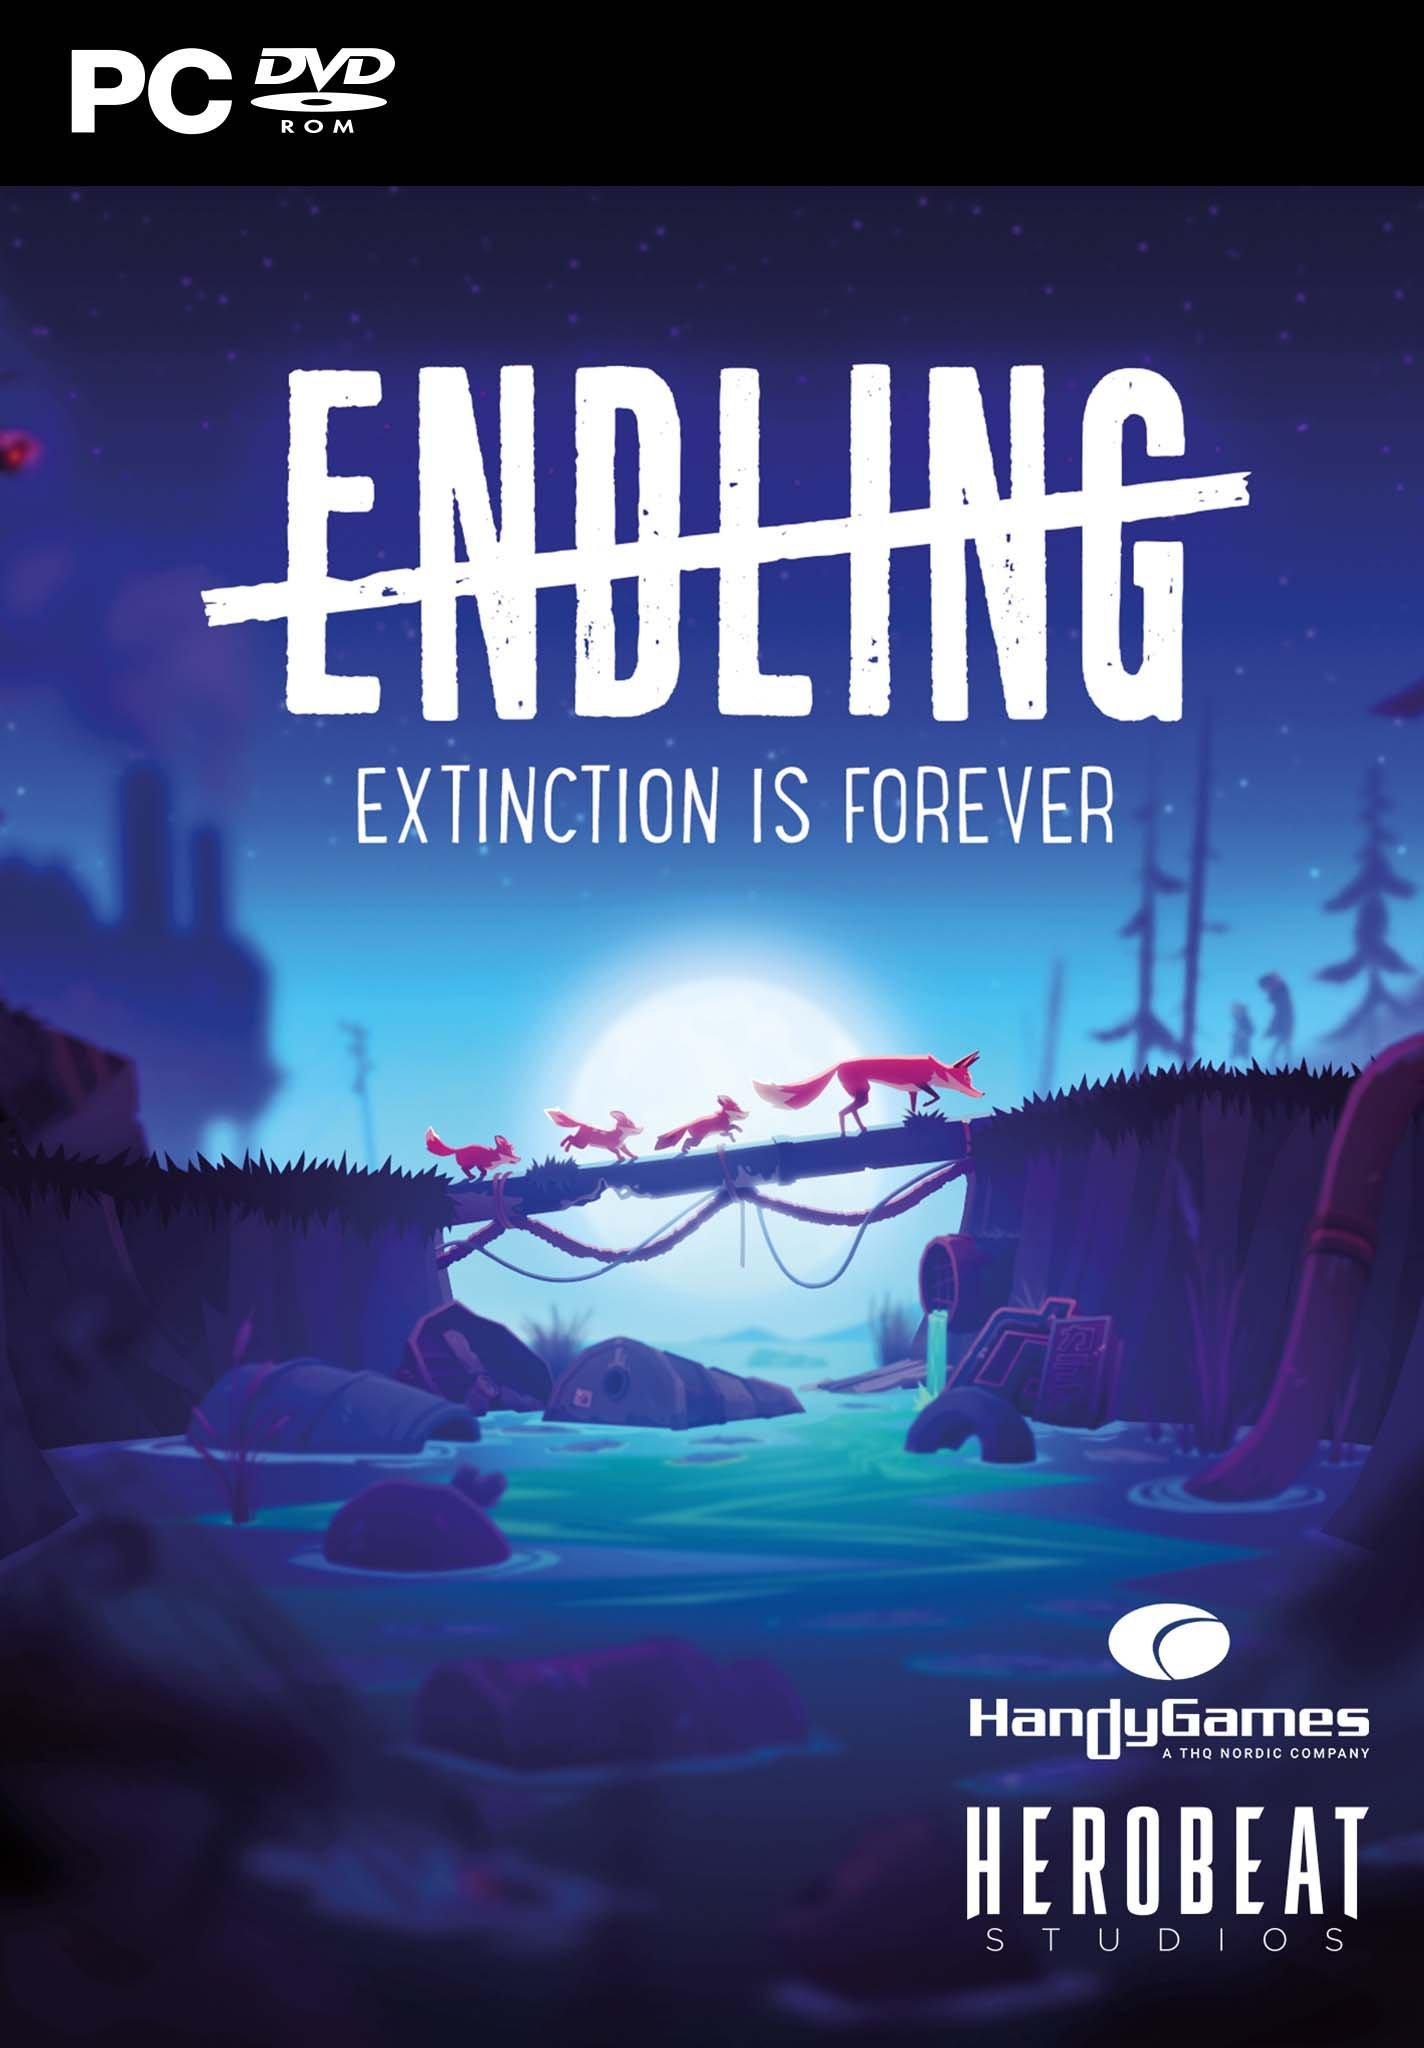 Endling Extinction is Forever - PC Steam